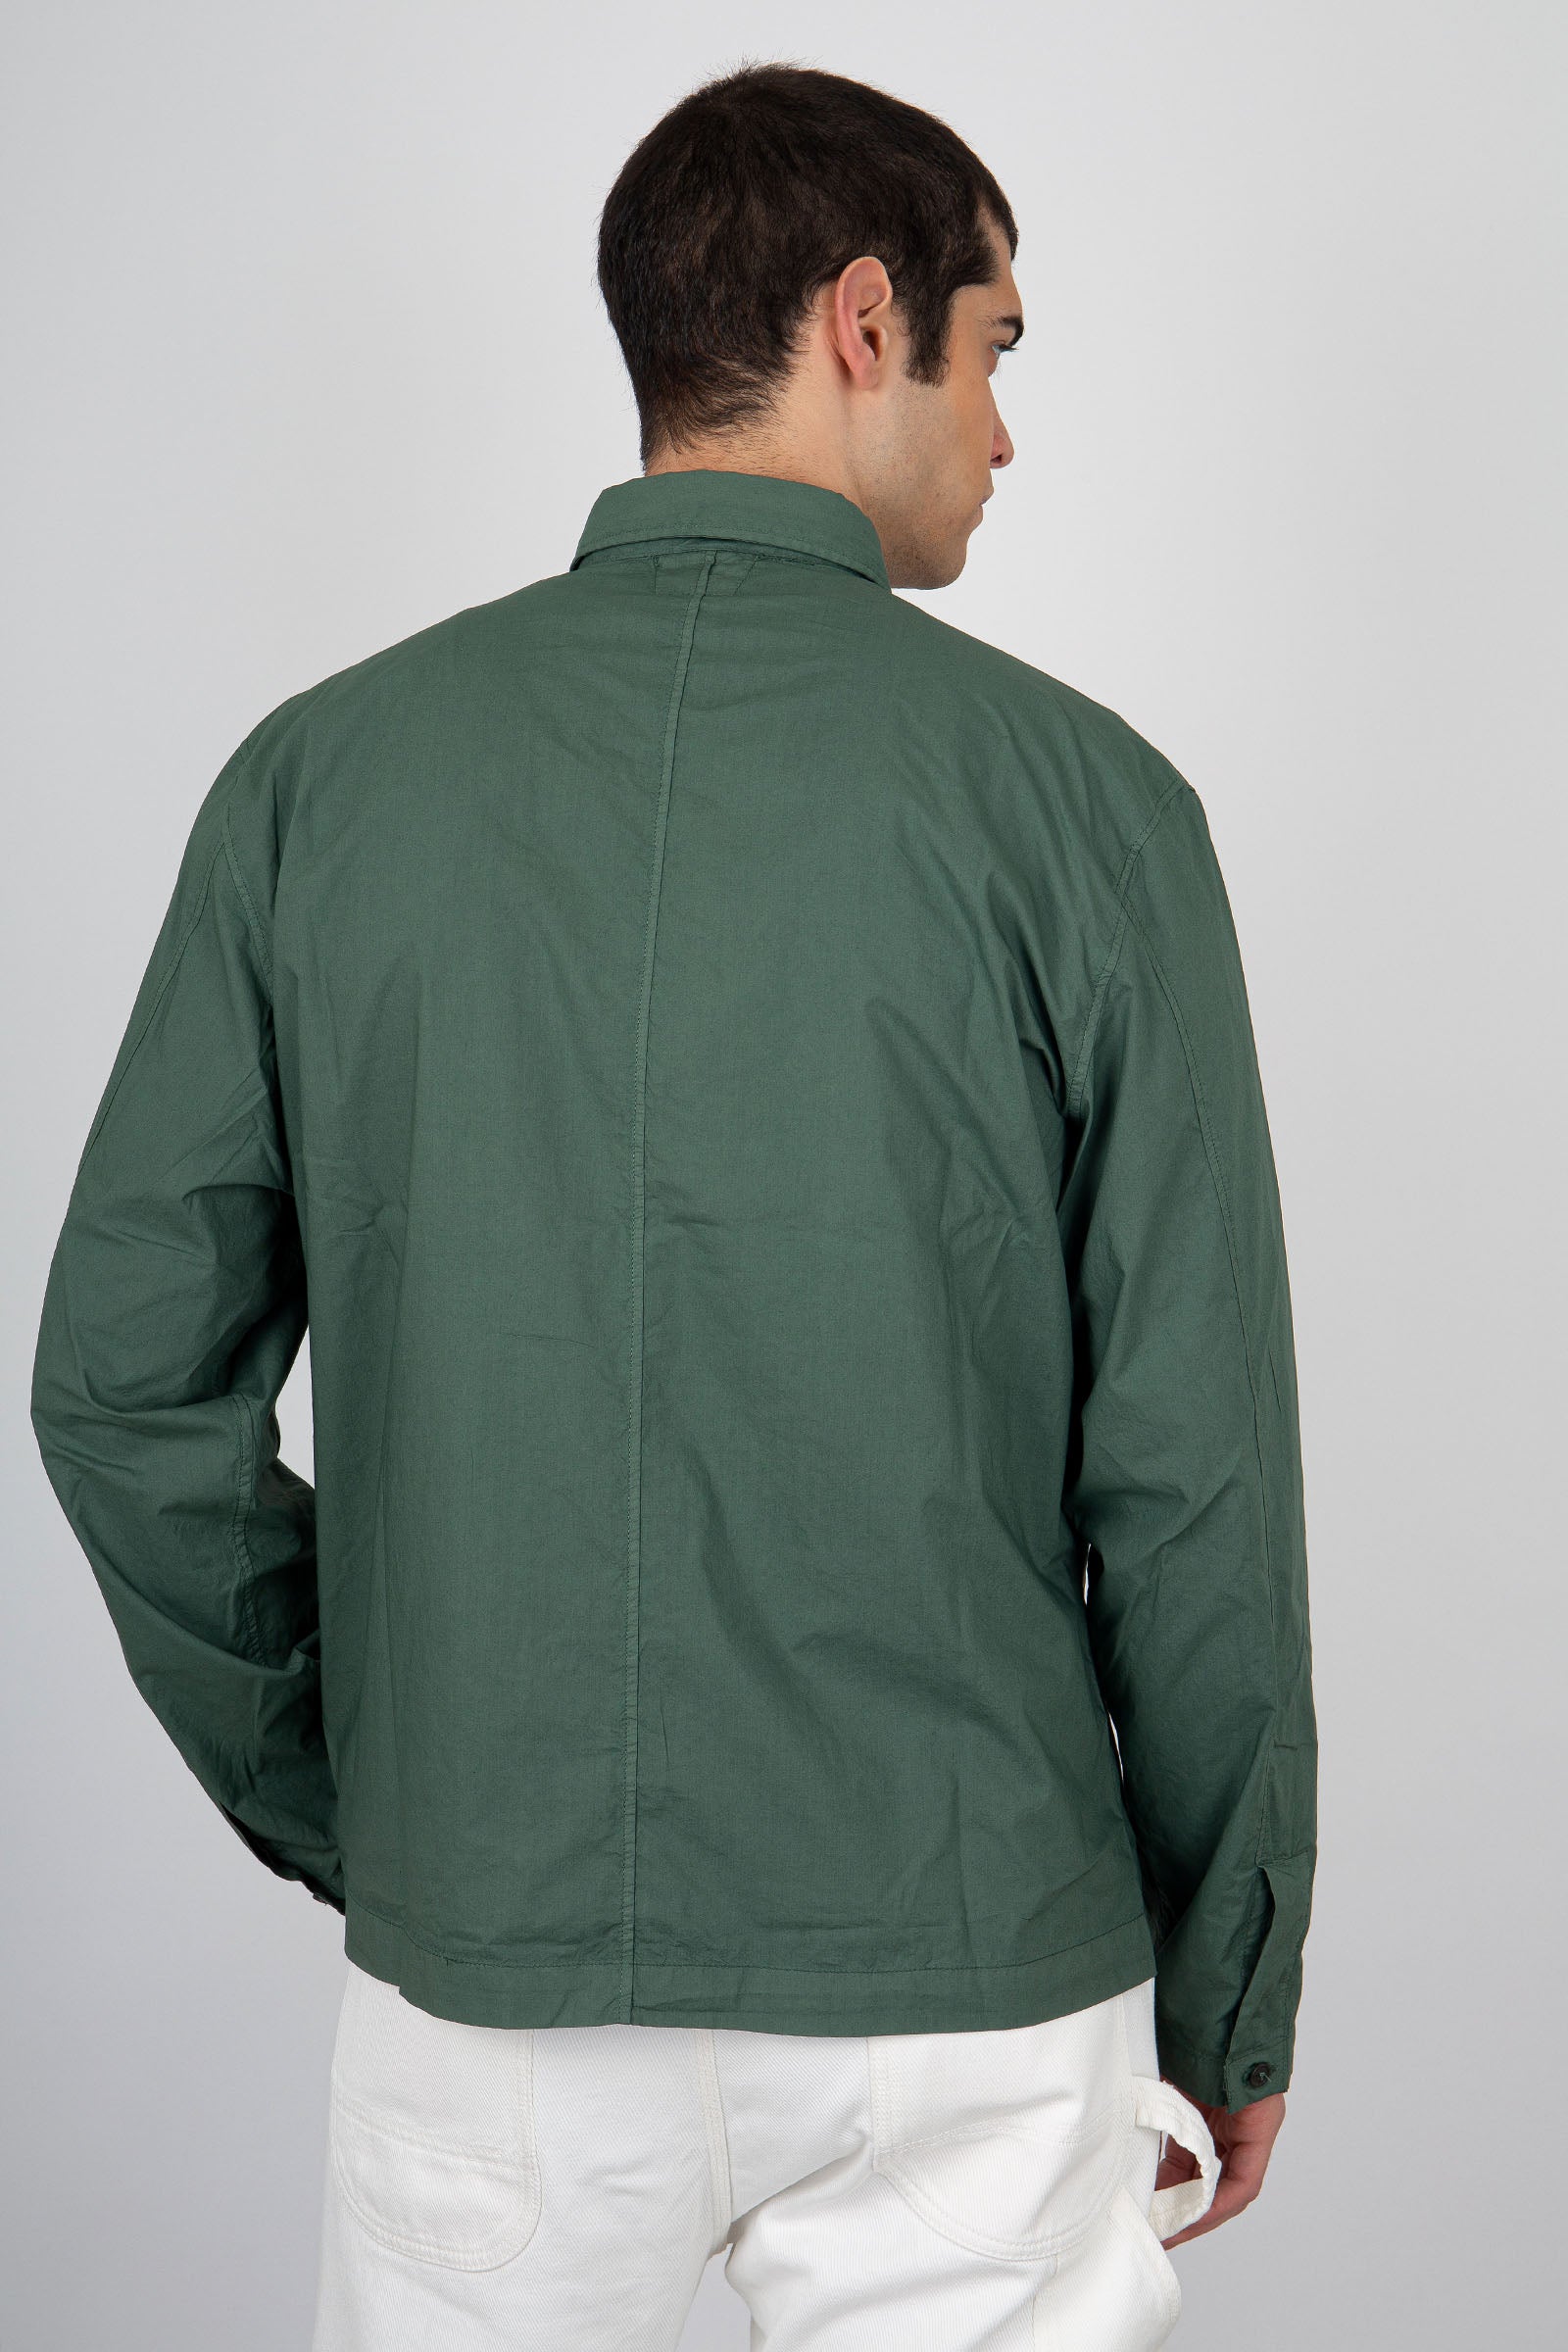 C.P. Company Green Cotton Poplin Workwear Shirt - 4